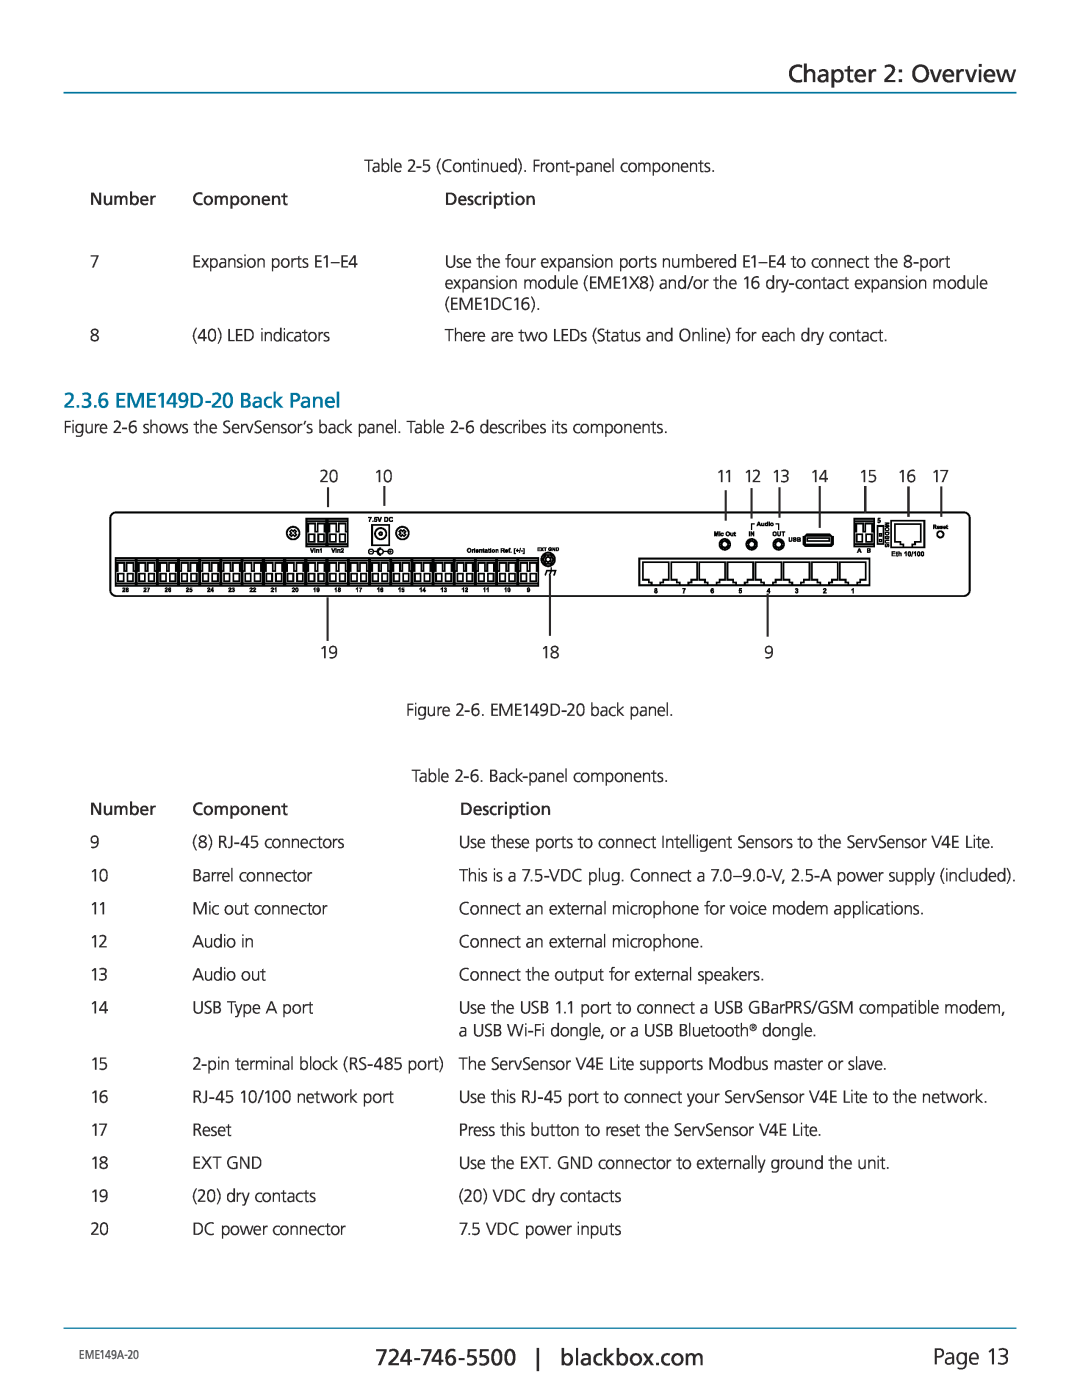 Black Box EME149A-60, EME149D-60, EME149A-20 manual 2.3.6 EME149D-20 Back Panel, Overview, Page 